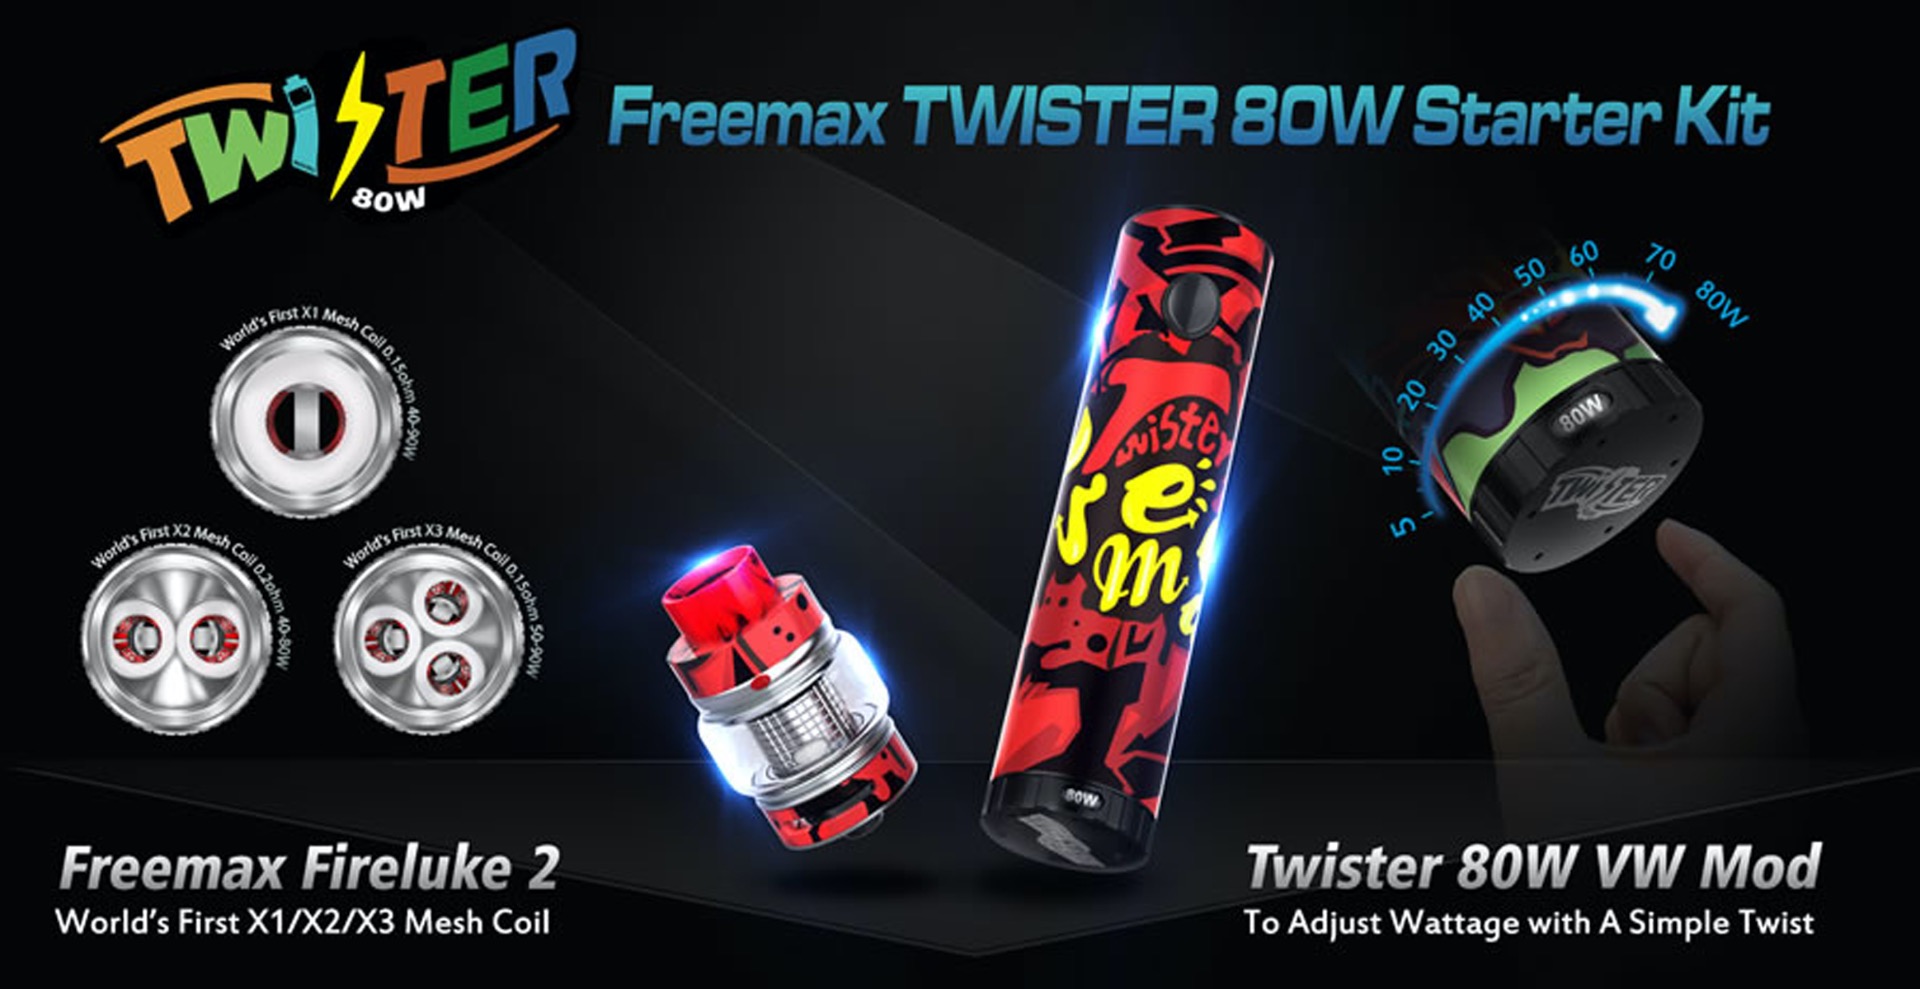 Freemax Twister 80W Kit image